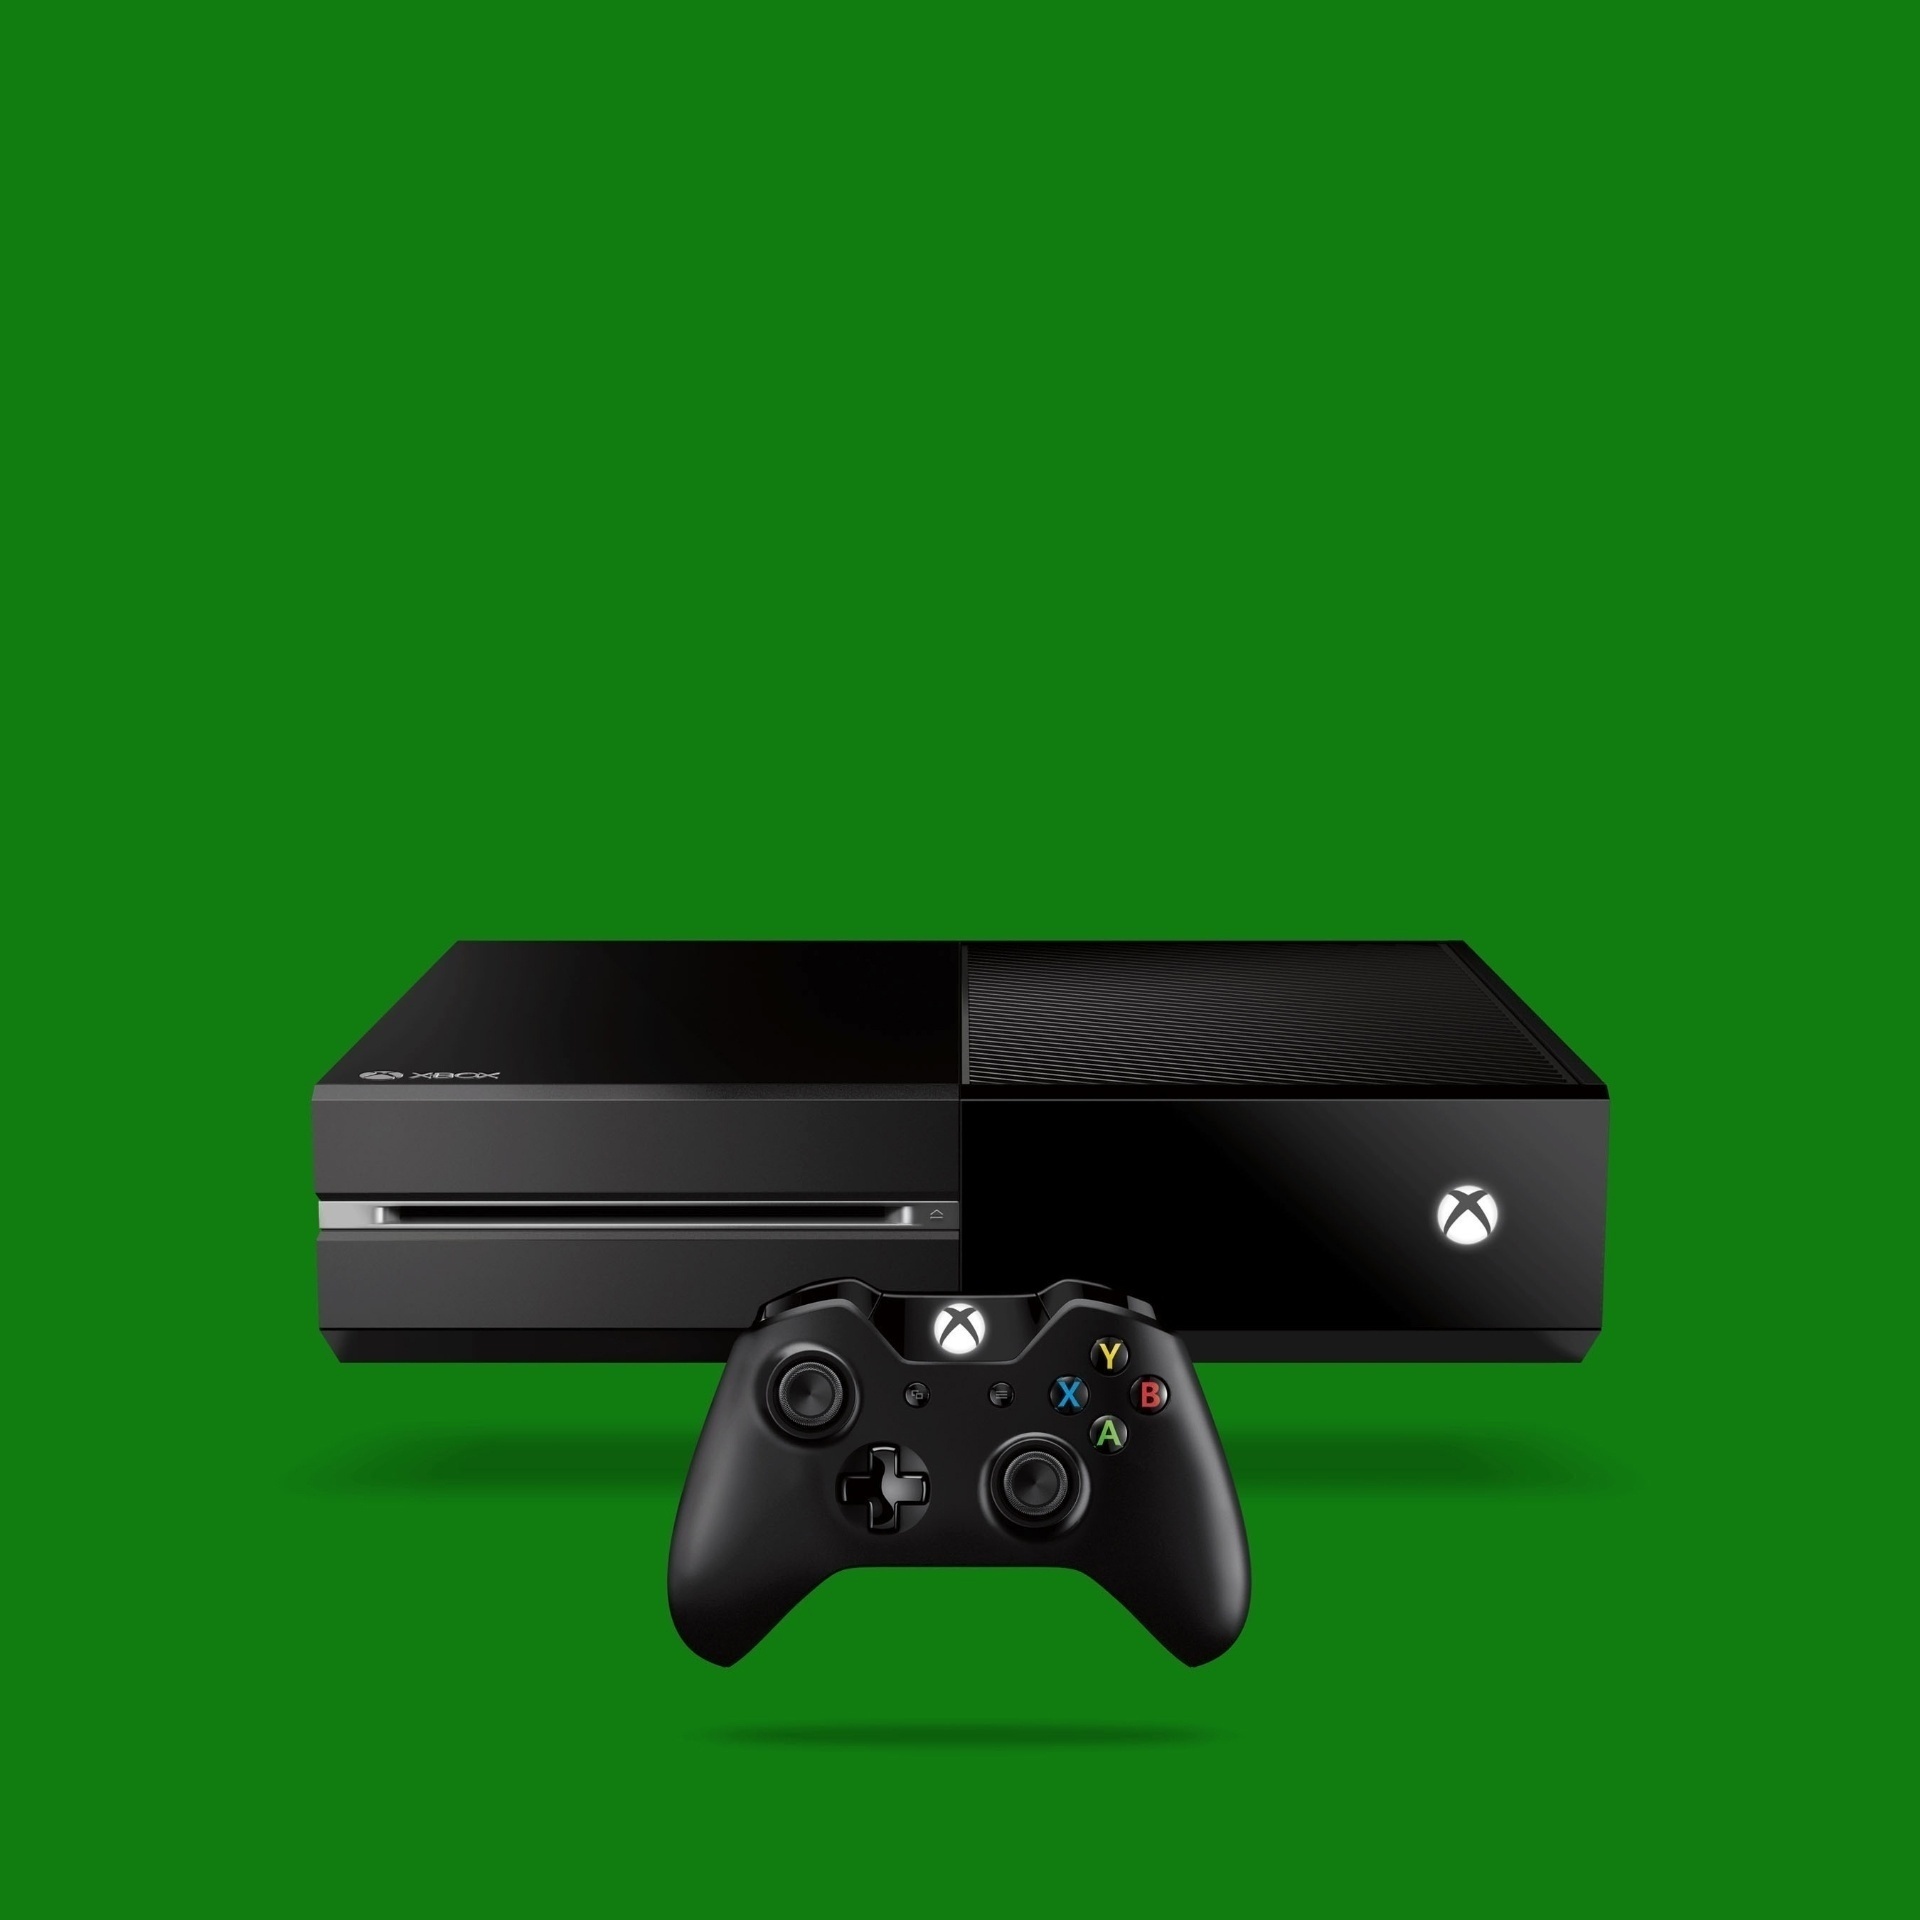 Quantum Break - Xbox One - Game Games - Loja de Games Online